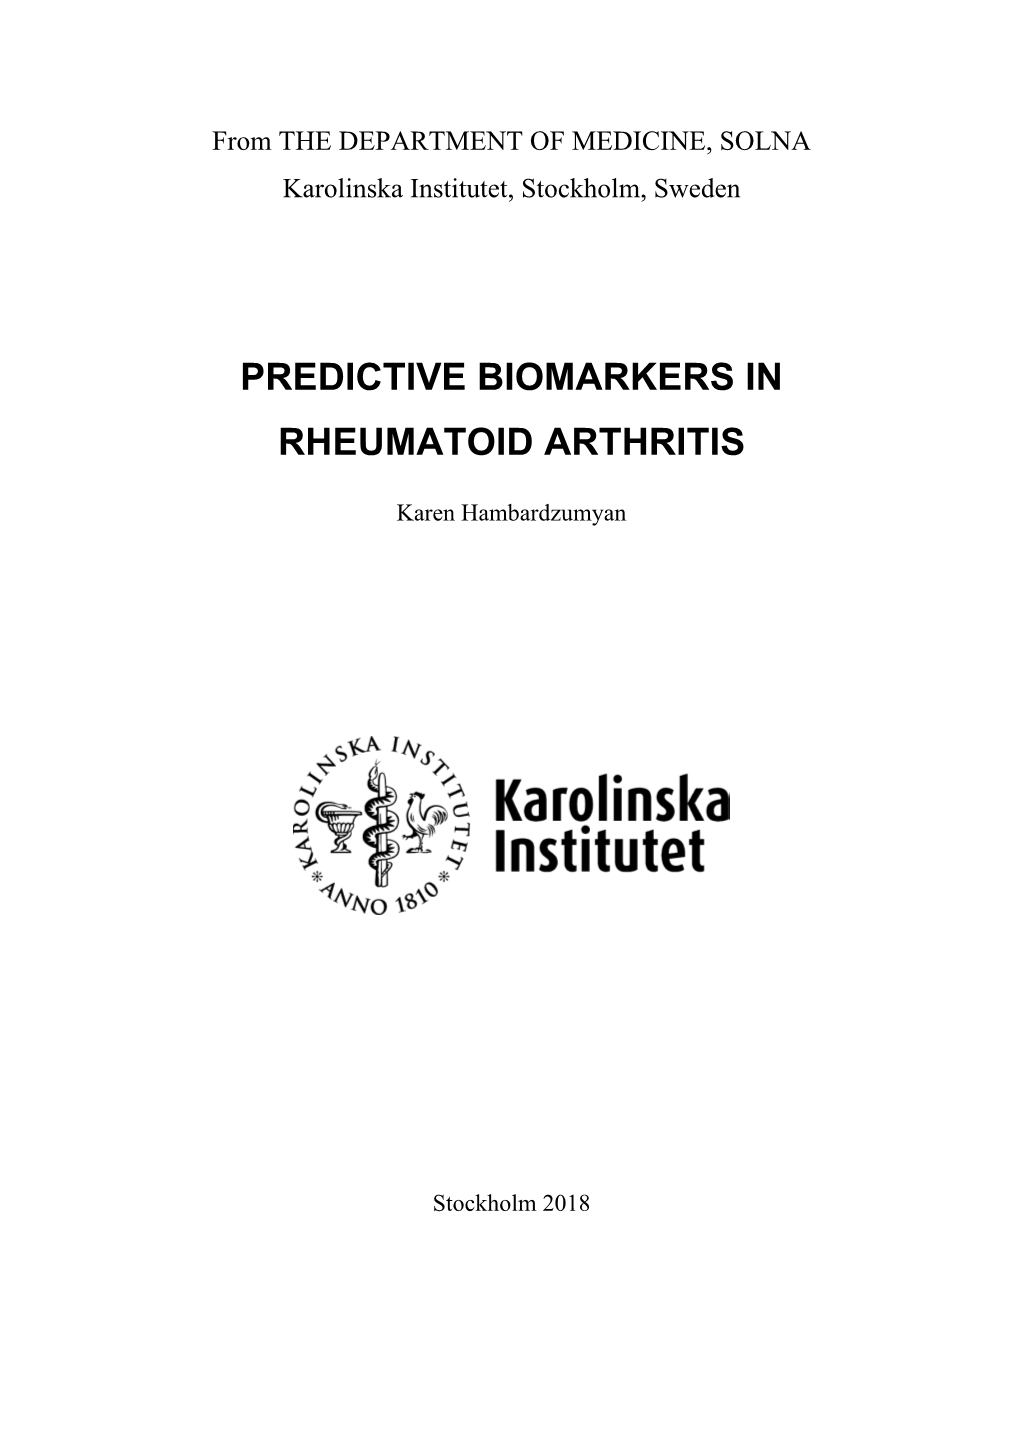 Predictive Biomarkers in Rheumatoid Arthritis